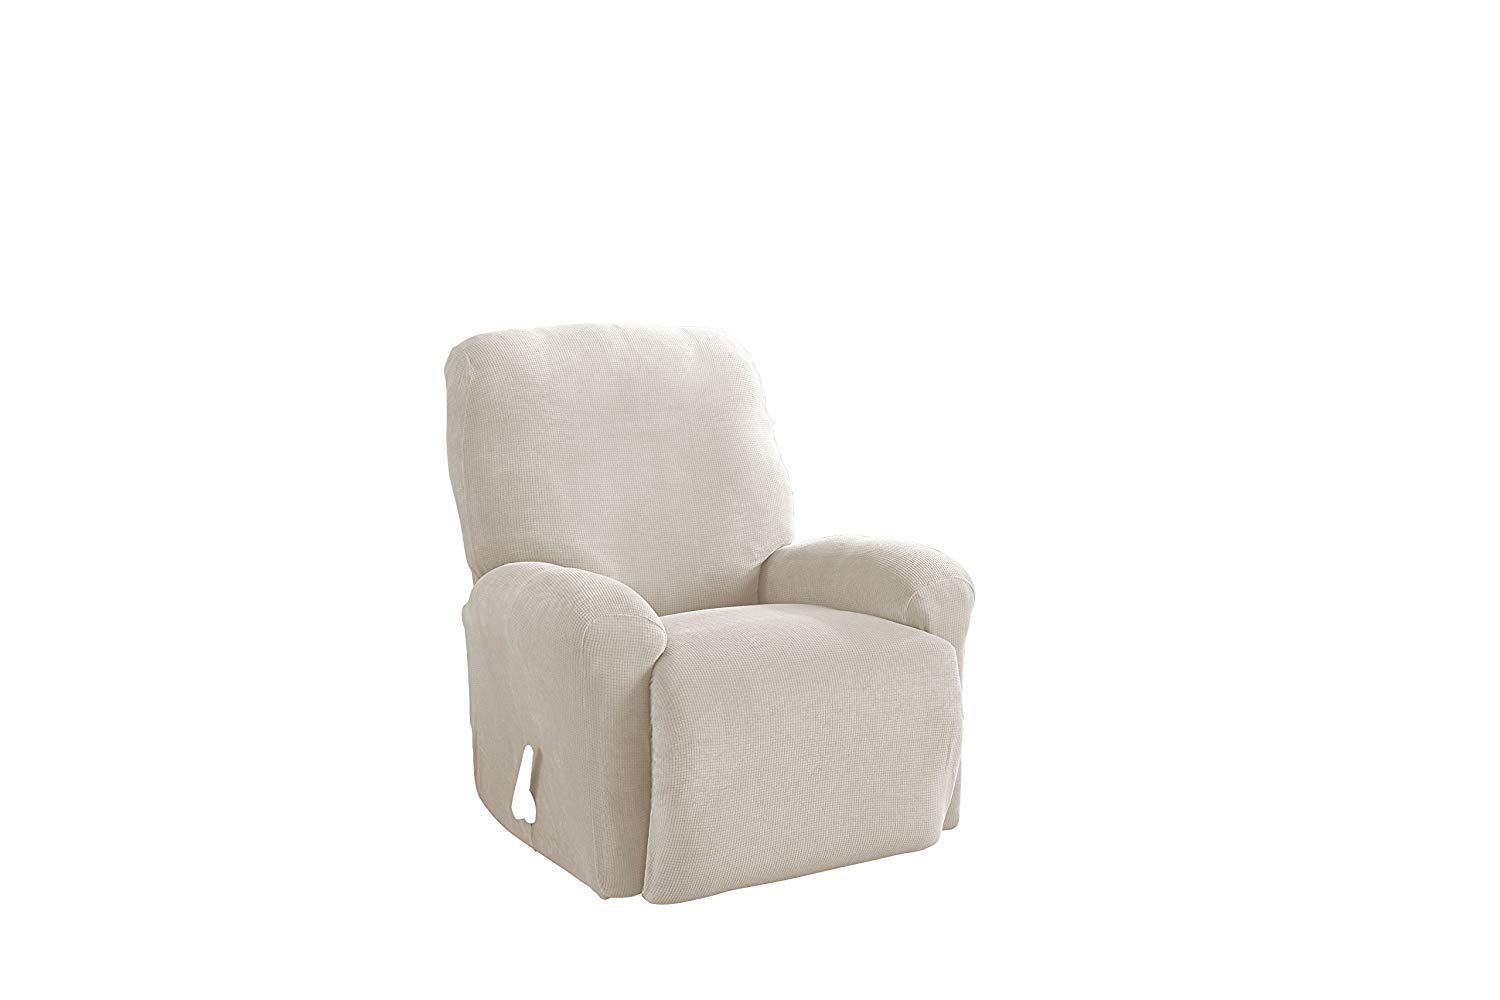  Serta 4 Piece Stretch Recliner Chair Cover